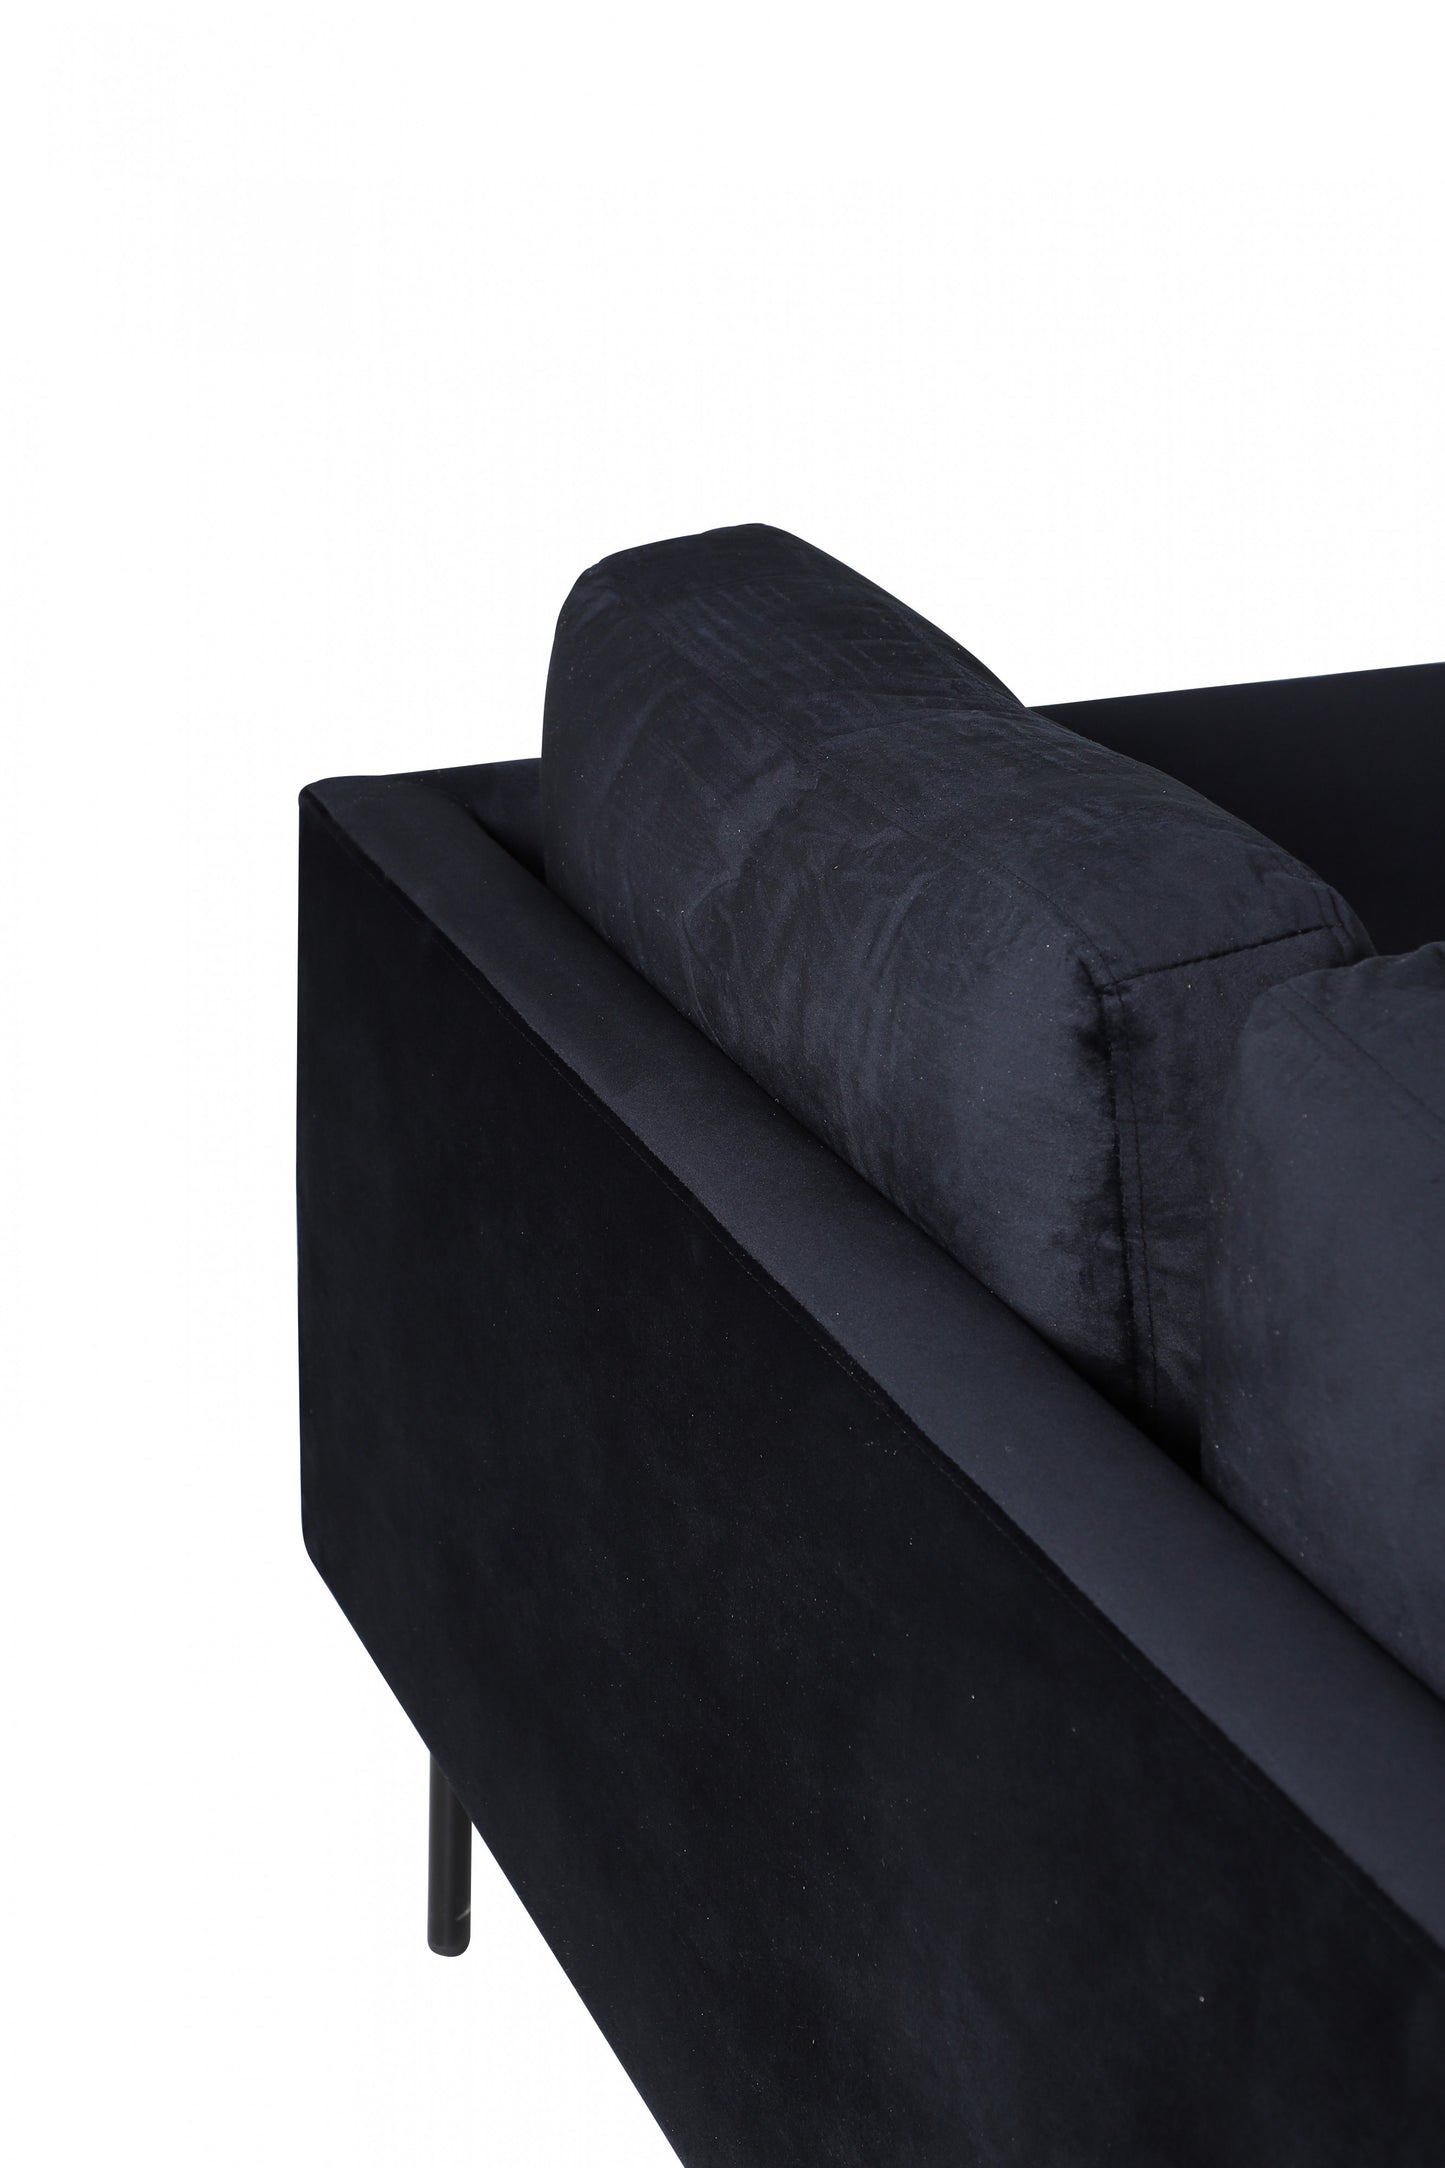 Venture-Design | Zoom U-Sofa - Schwarz / Schwarzer Velours